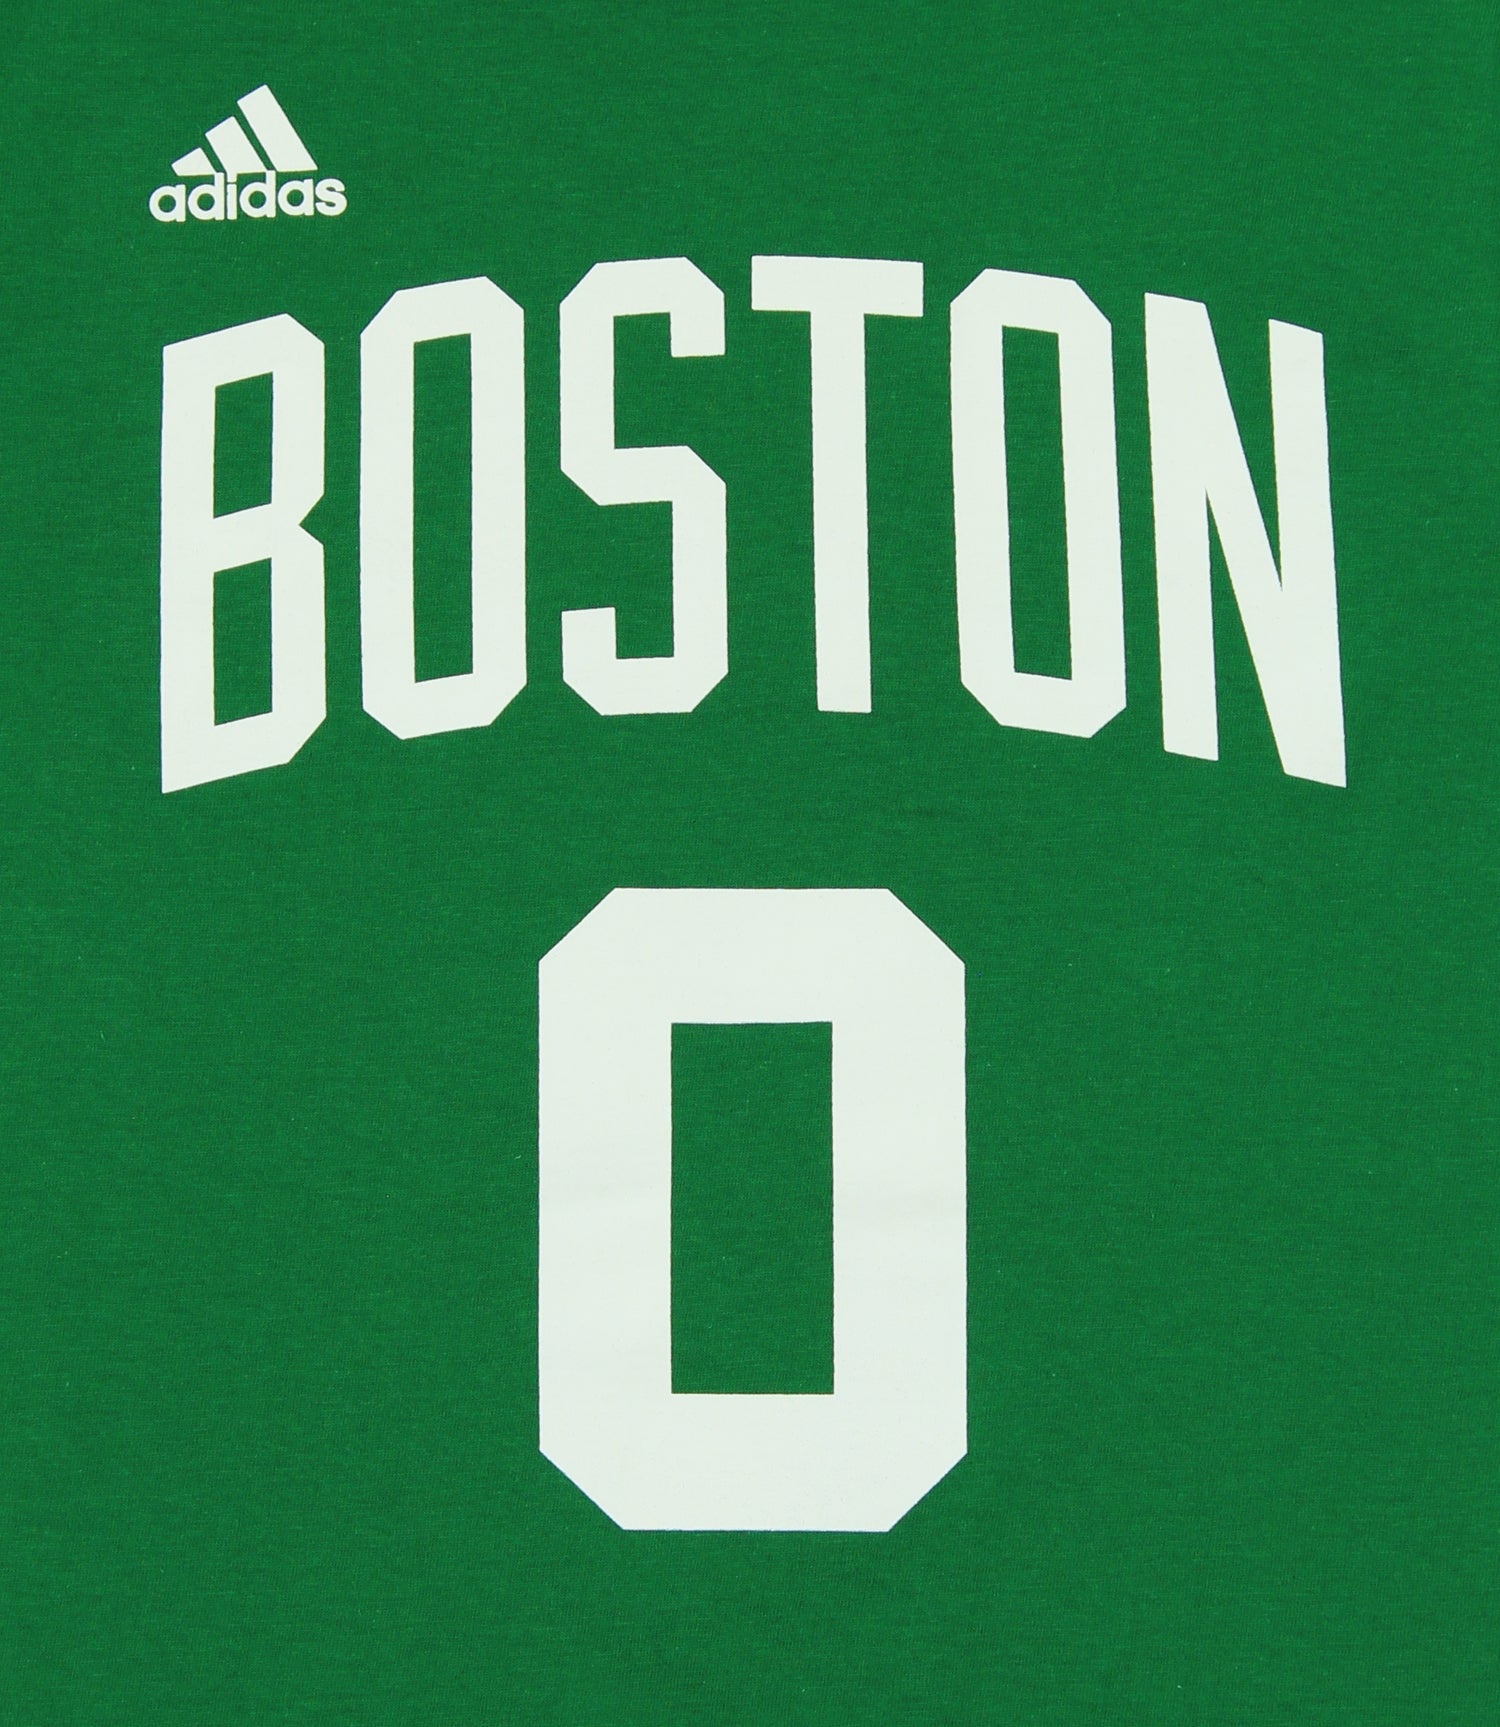 adidas boston celtics shirt